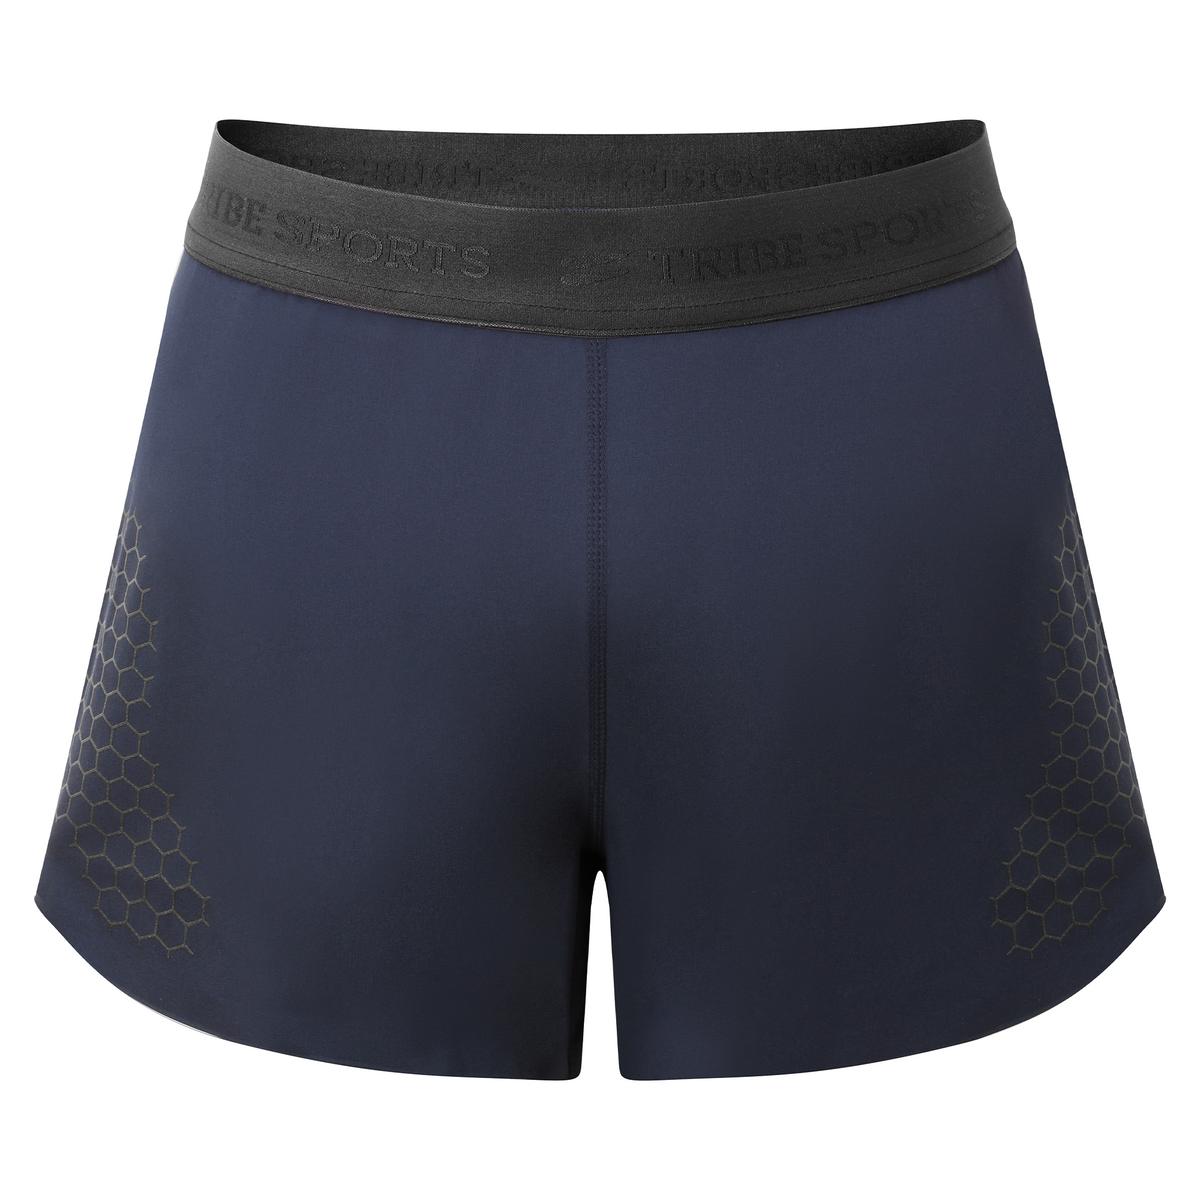 Endure Swift Shorts - Navy/Charcoal